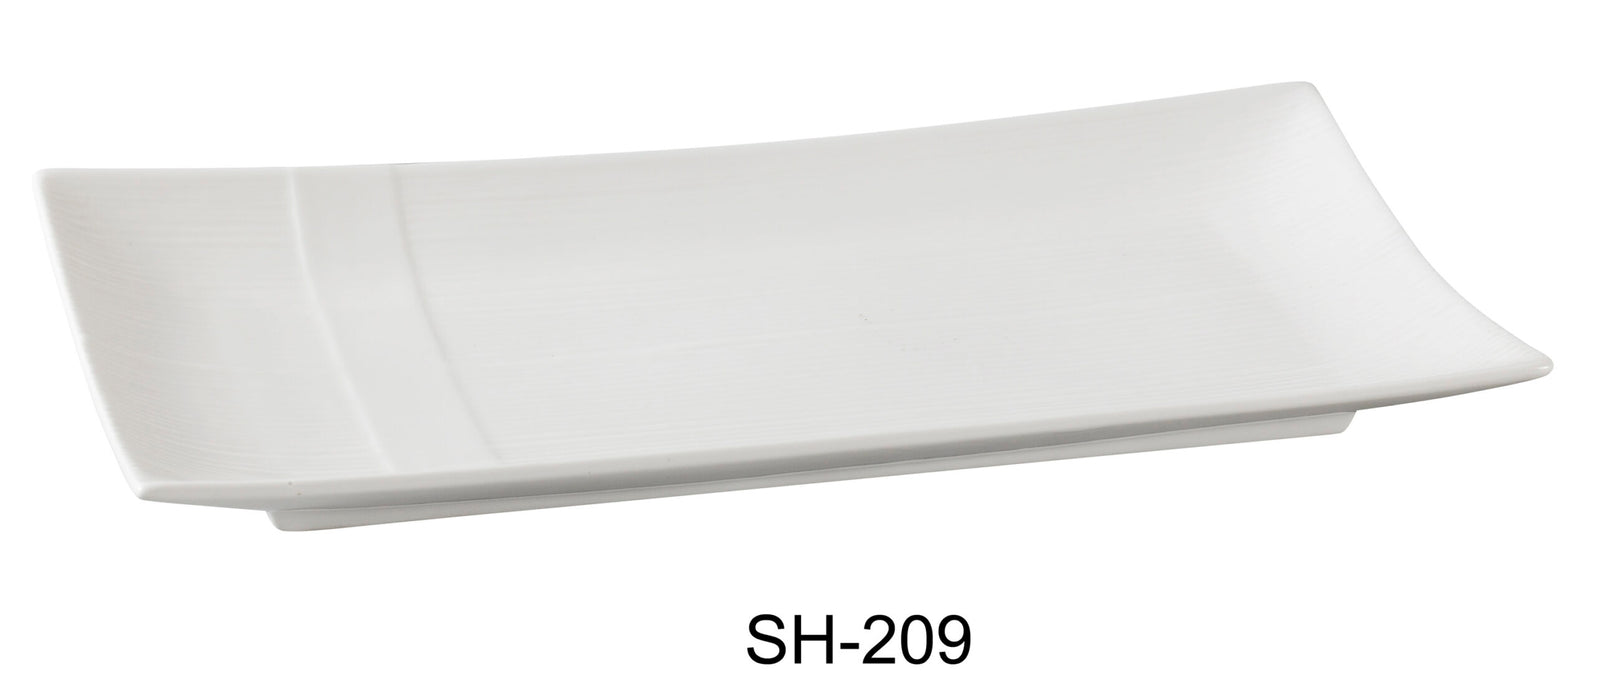 Yanco SH-209 Shanghai Rectangular Plate, 9.5″ Length x 4.5″ Width, China, Bone White (Pack of 36)